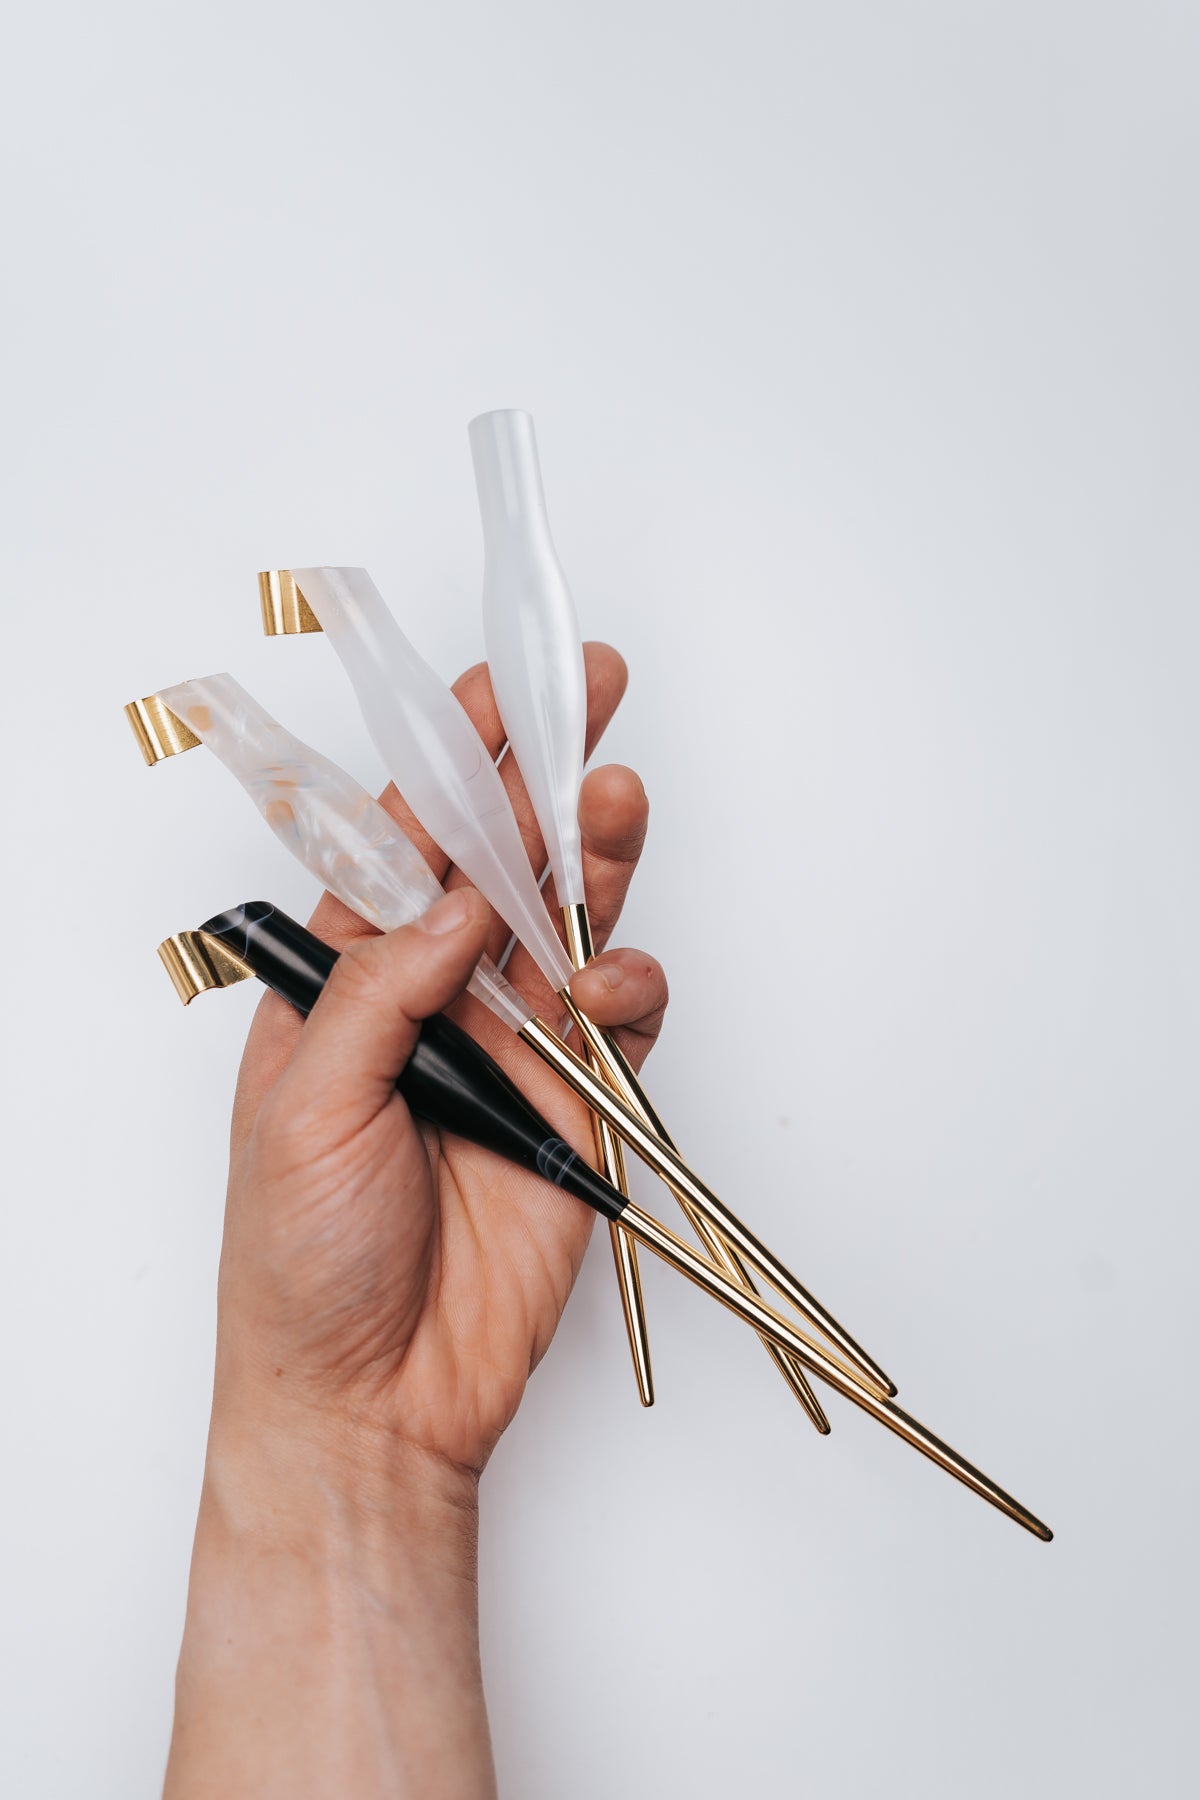 3pcs oblique pen holder wooden fountain pen calligraphy kits for beginners